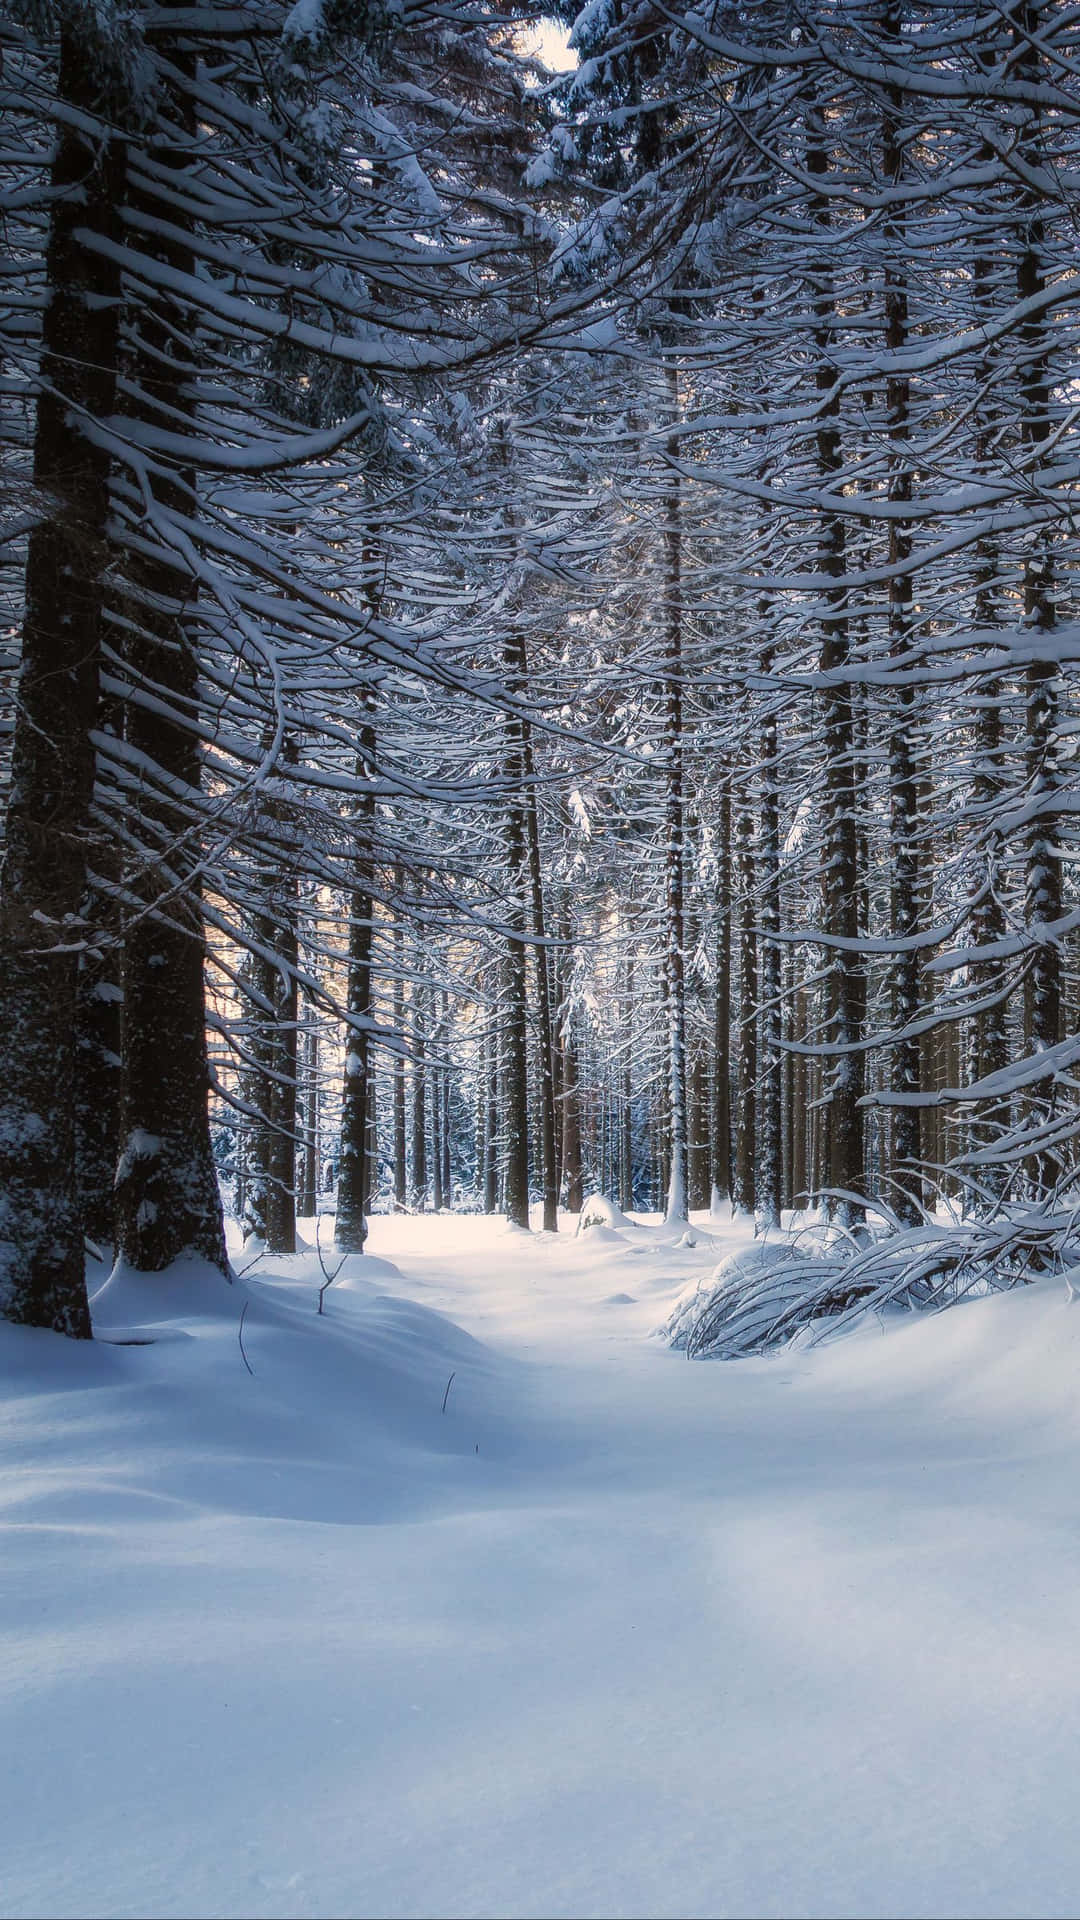 Walk Through the Winter Wonderland of a Snowy Forest